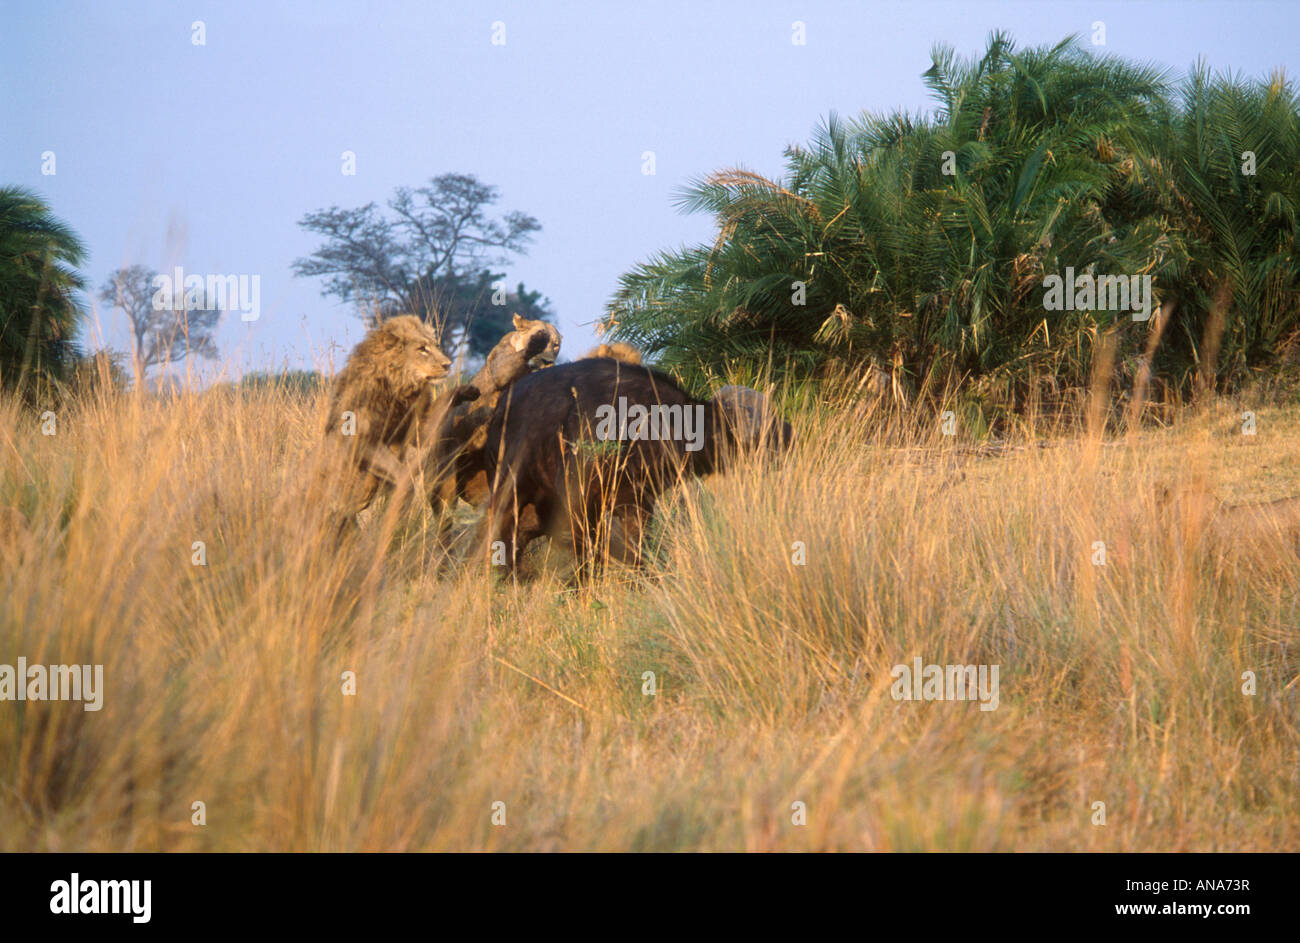 Lions attacking a buffalo Stock Photo